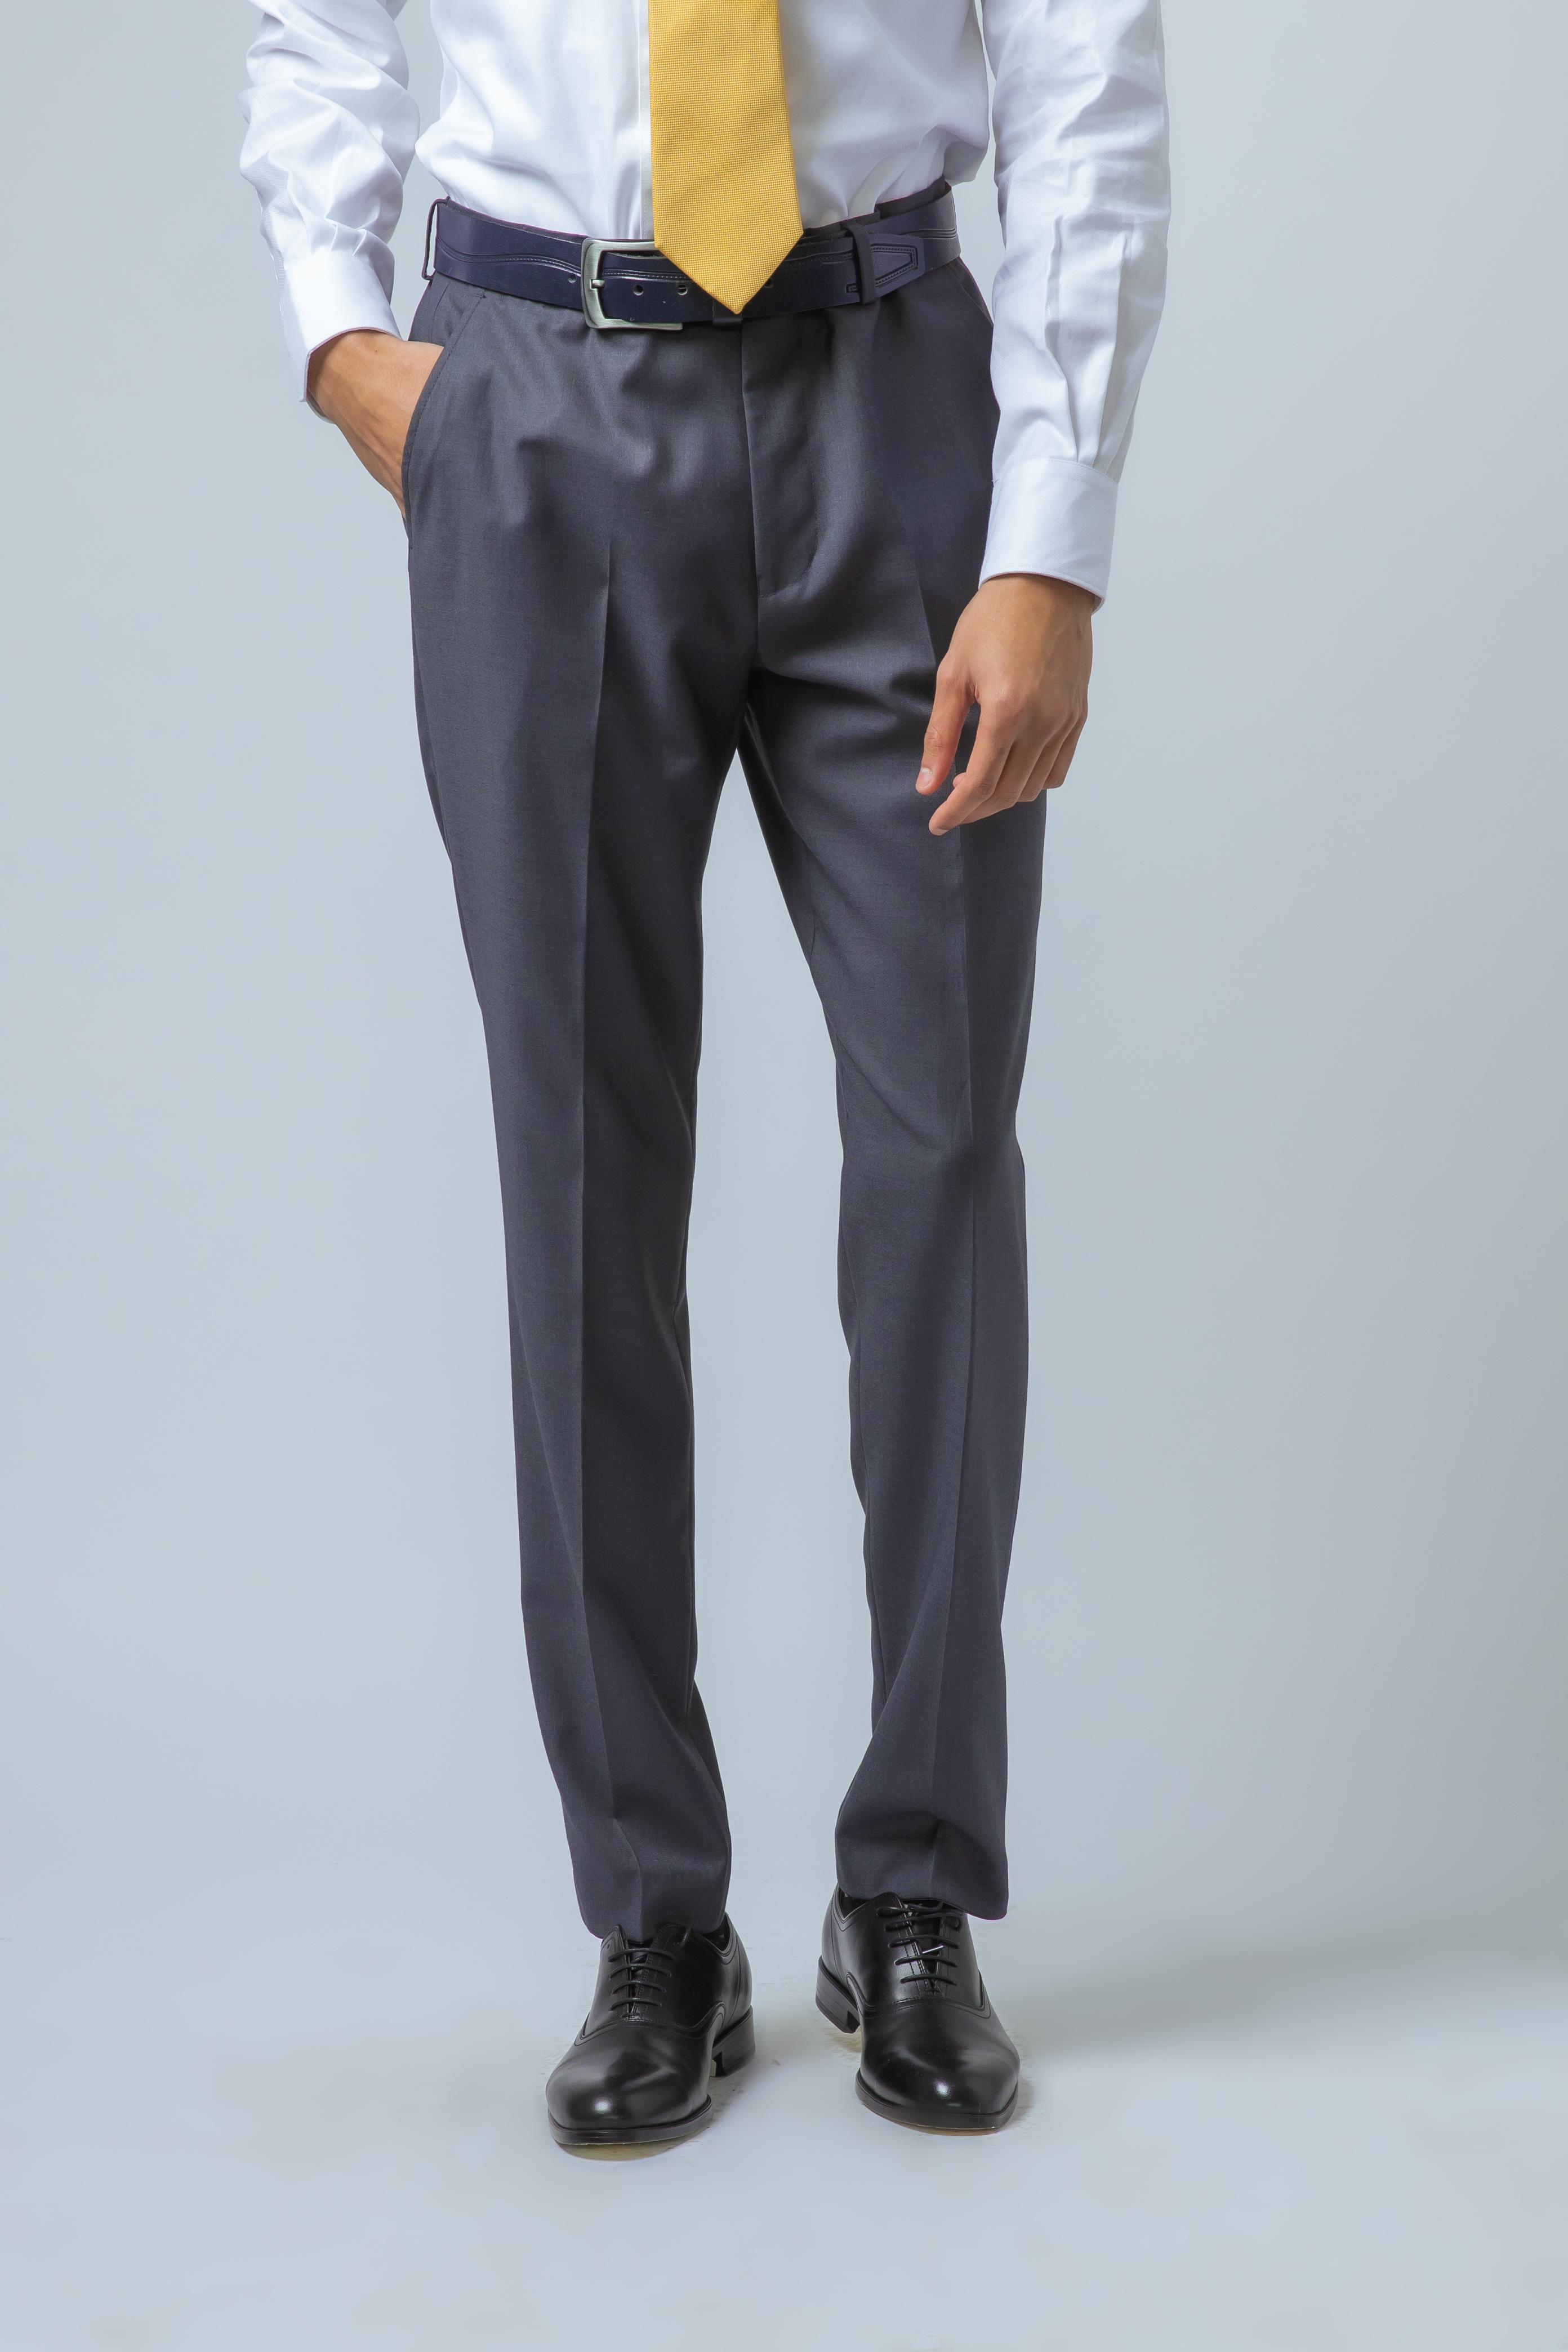 Men's Formal Grey Trousers - DYLAN